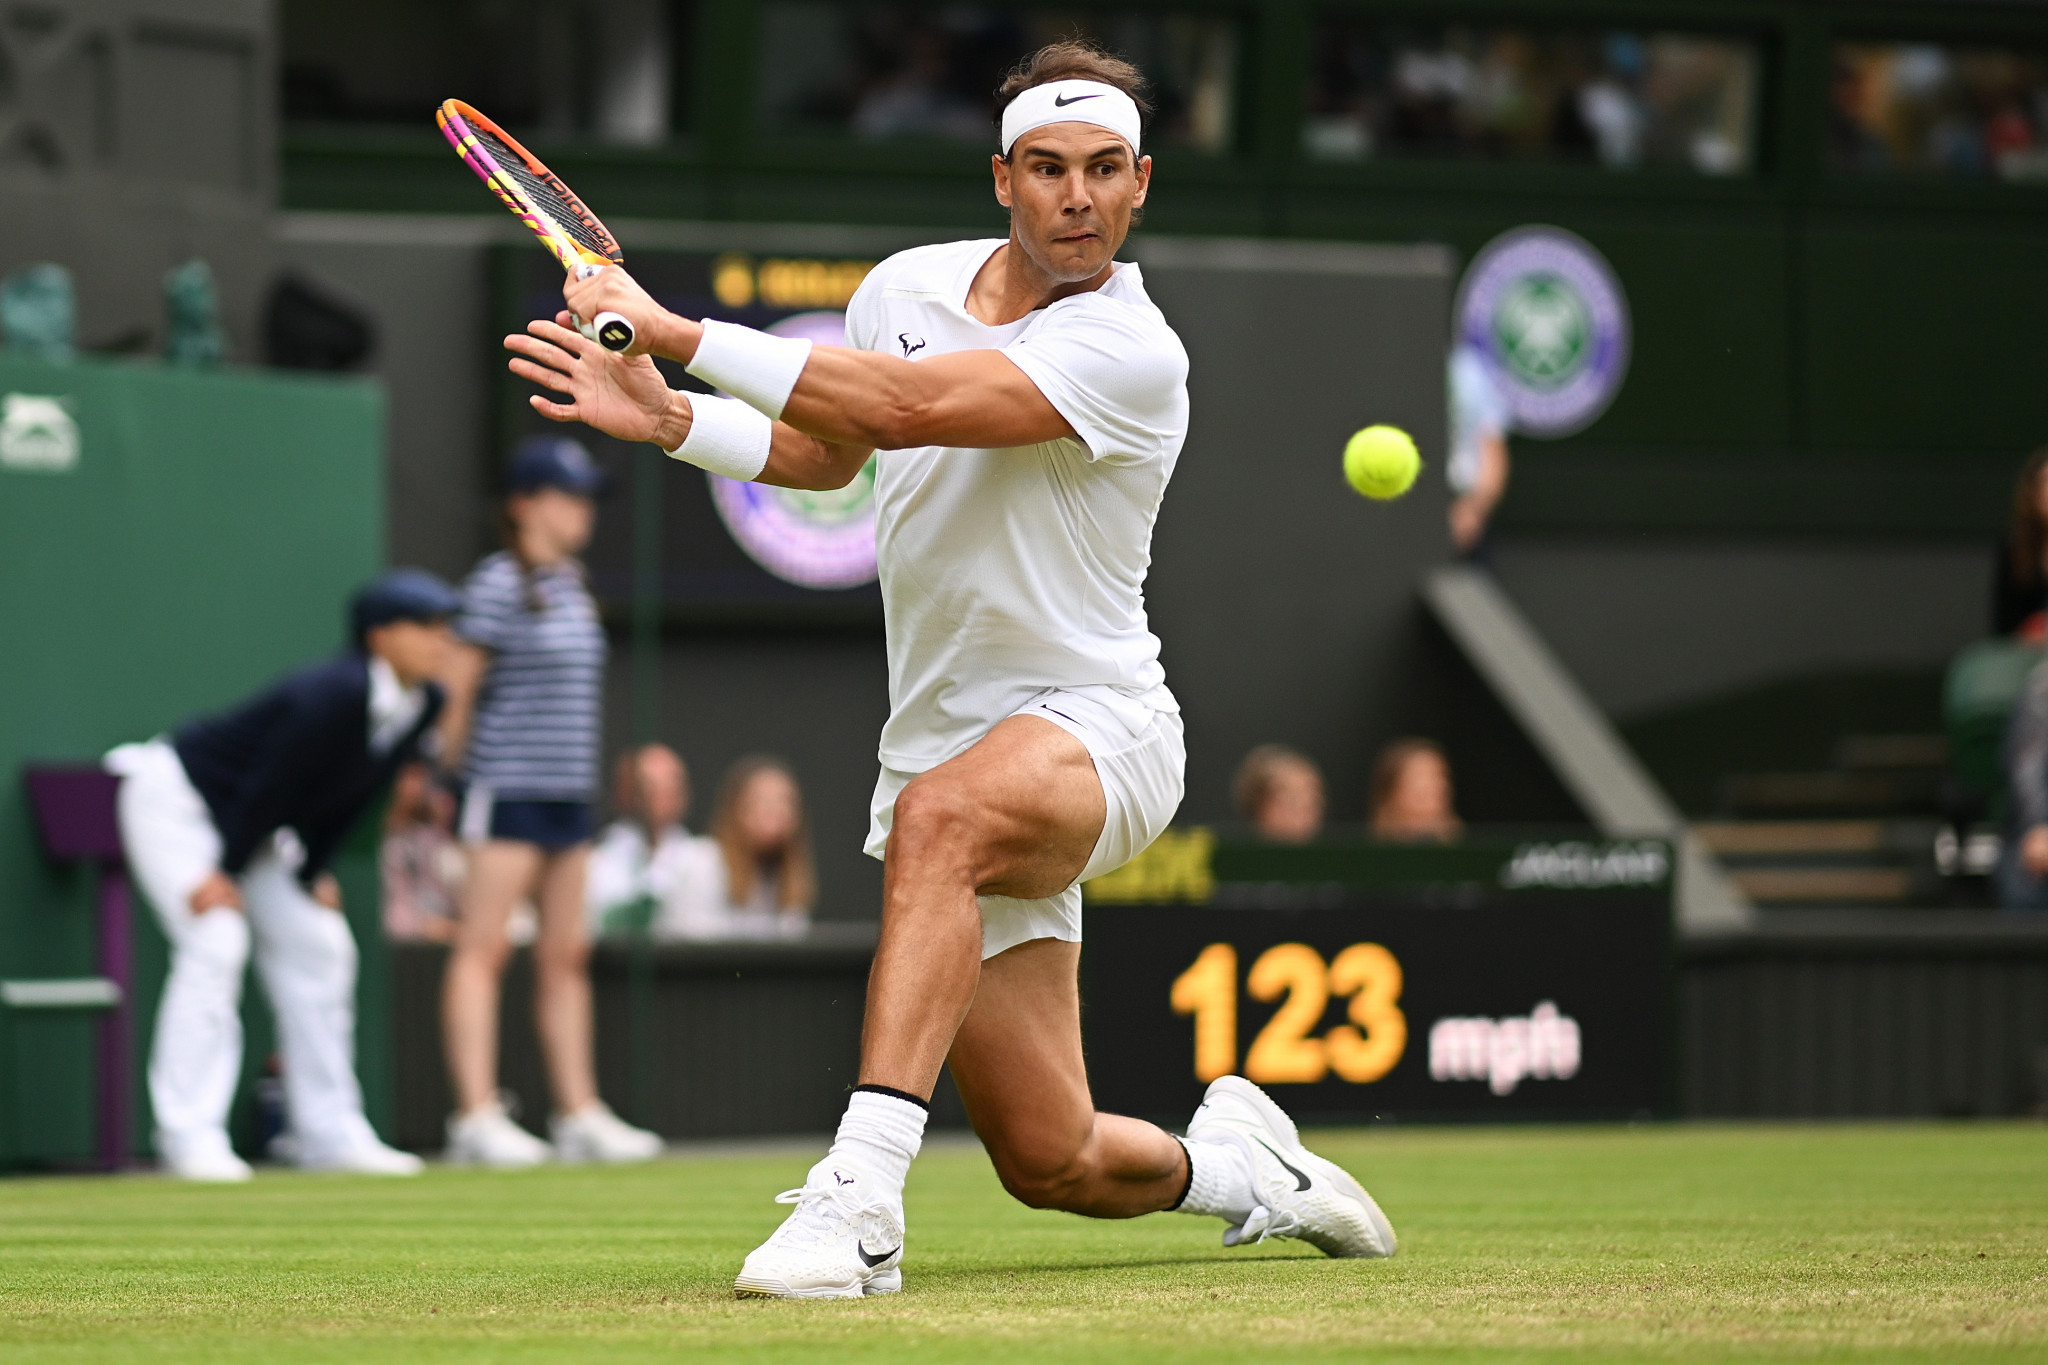 Spain's Rafael Nadal overcame plucky Dutchman Botic van de Zandschulp to book his place into the Wimbledon quarter-finals ©Getty Images